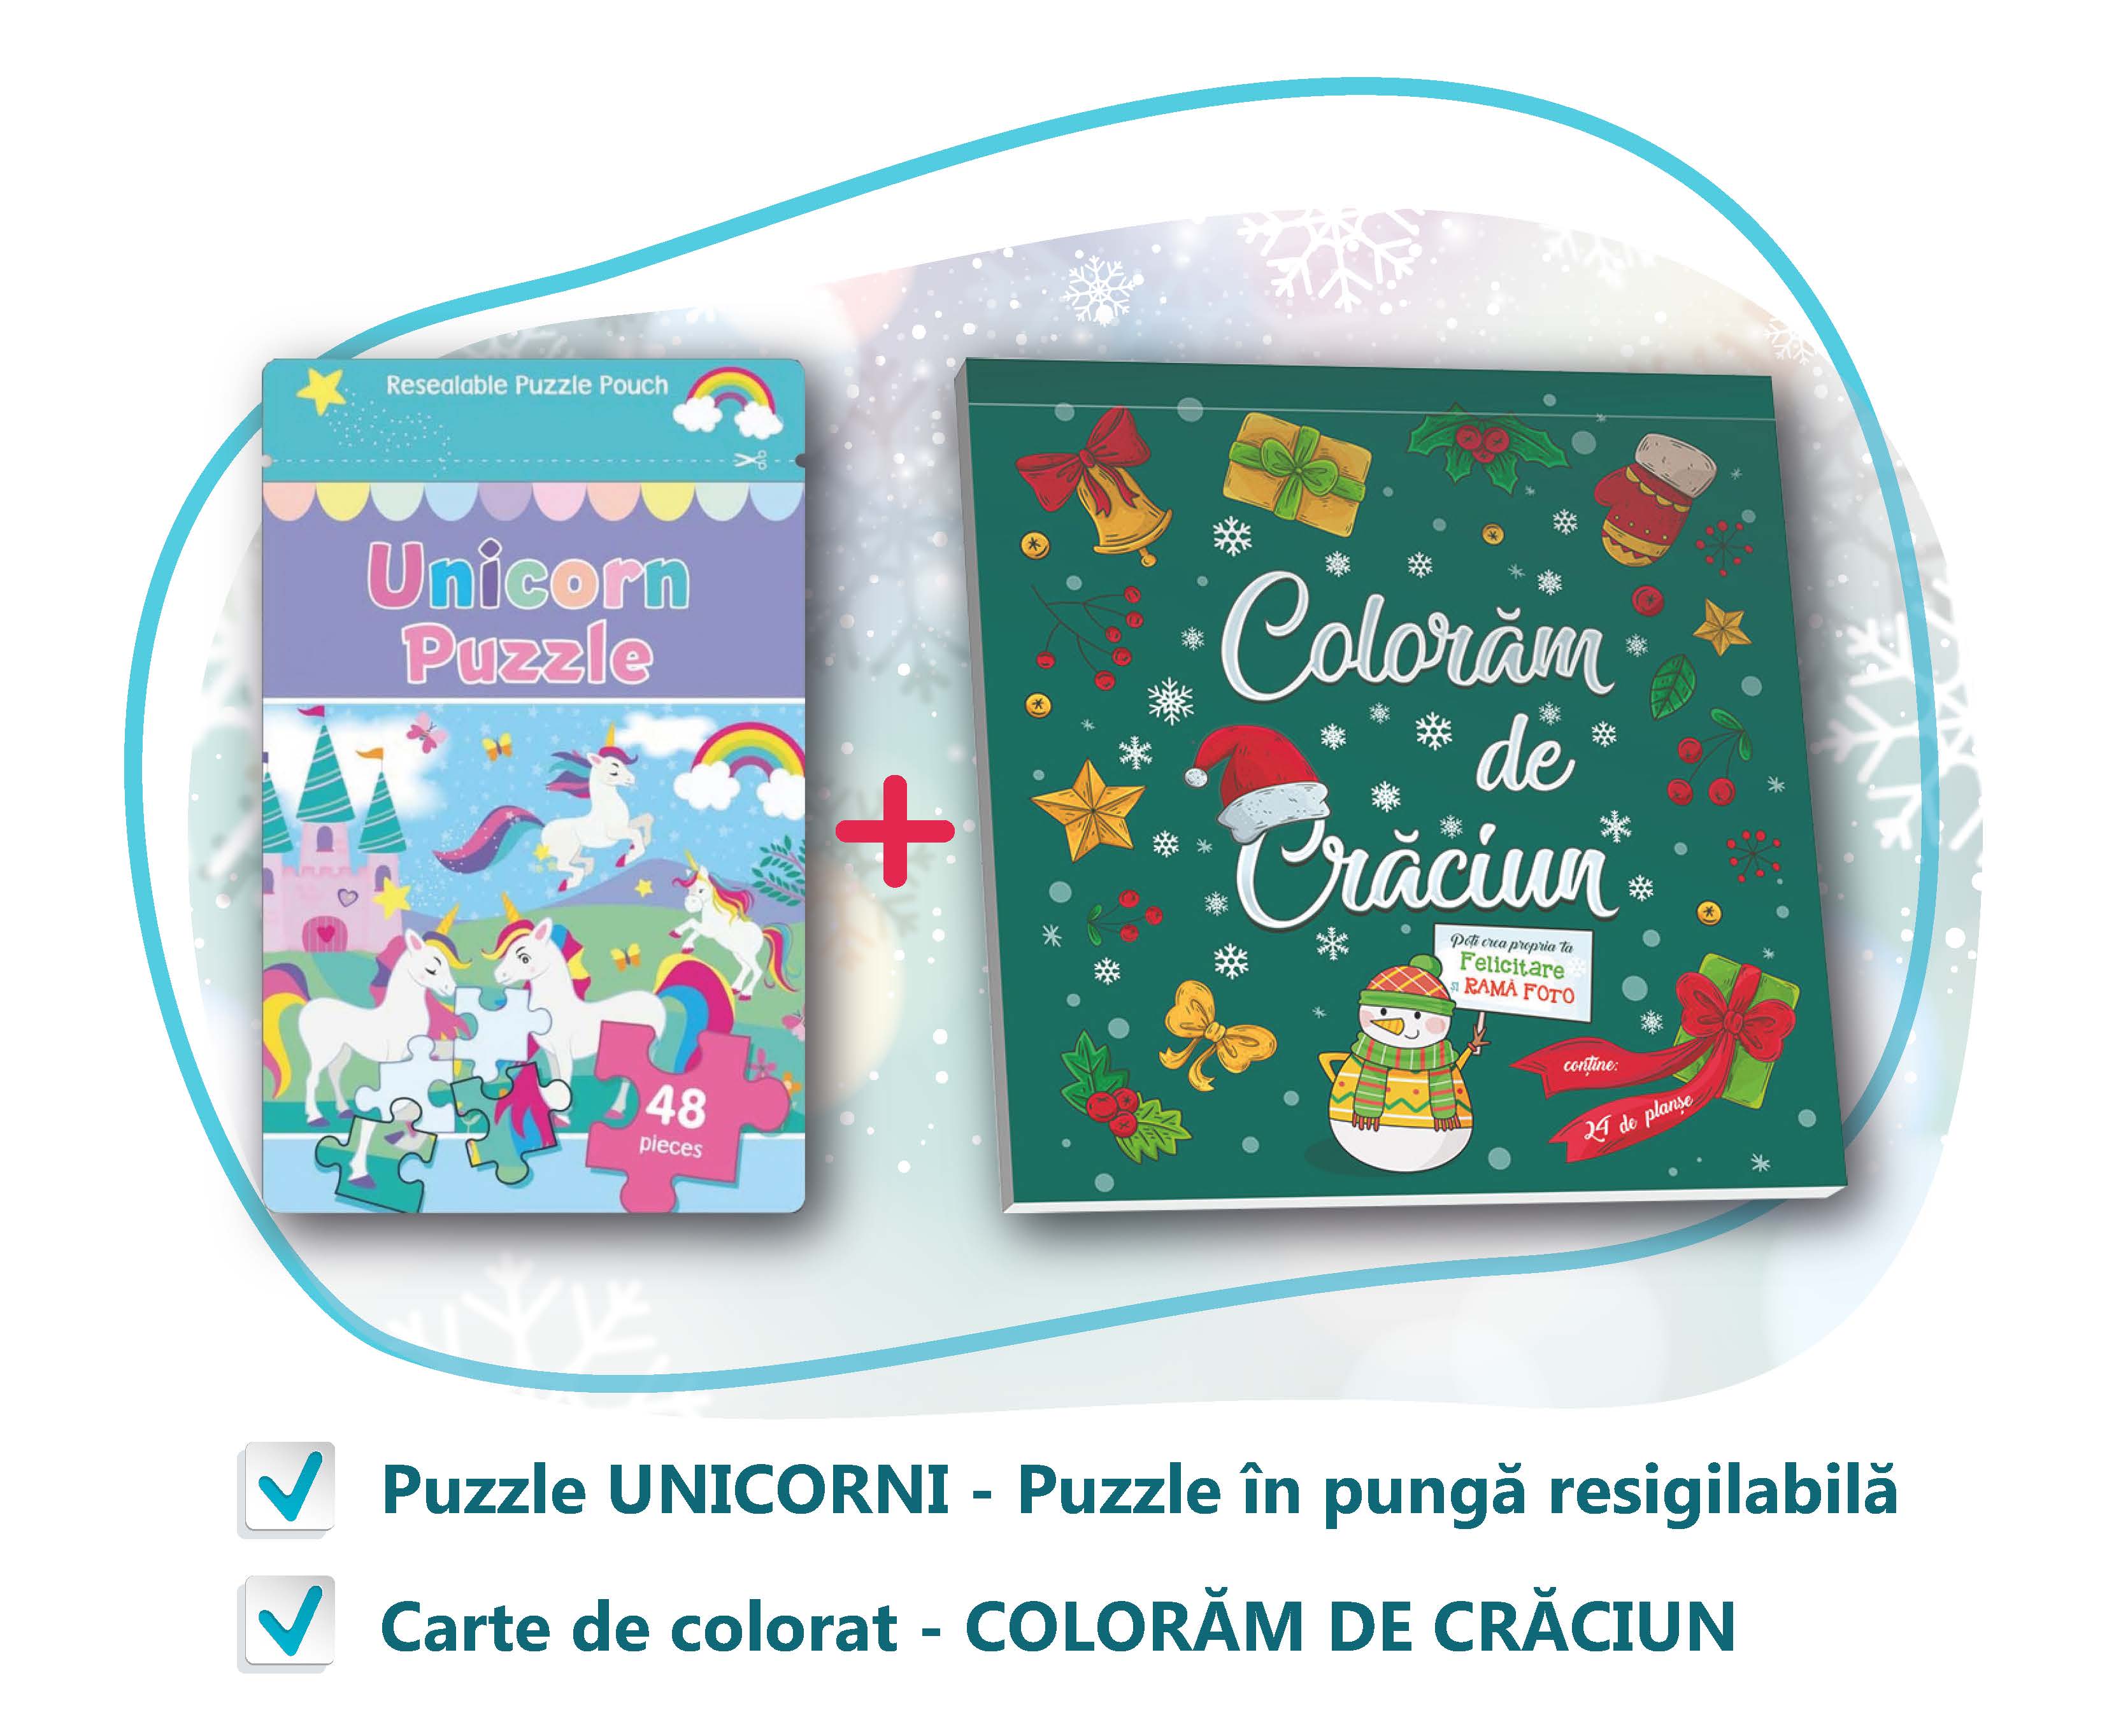 Pachet cadou Craciun - Carte de colorat + Puzzle Unicorn